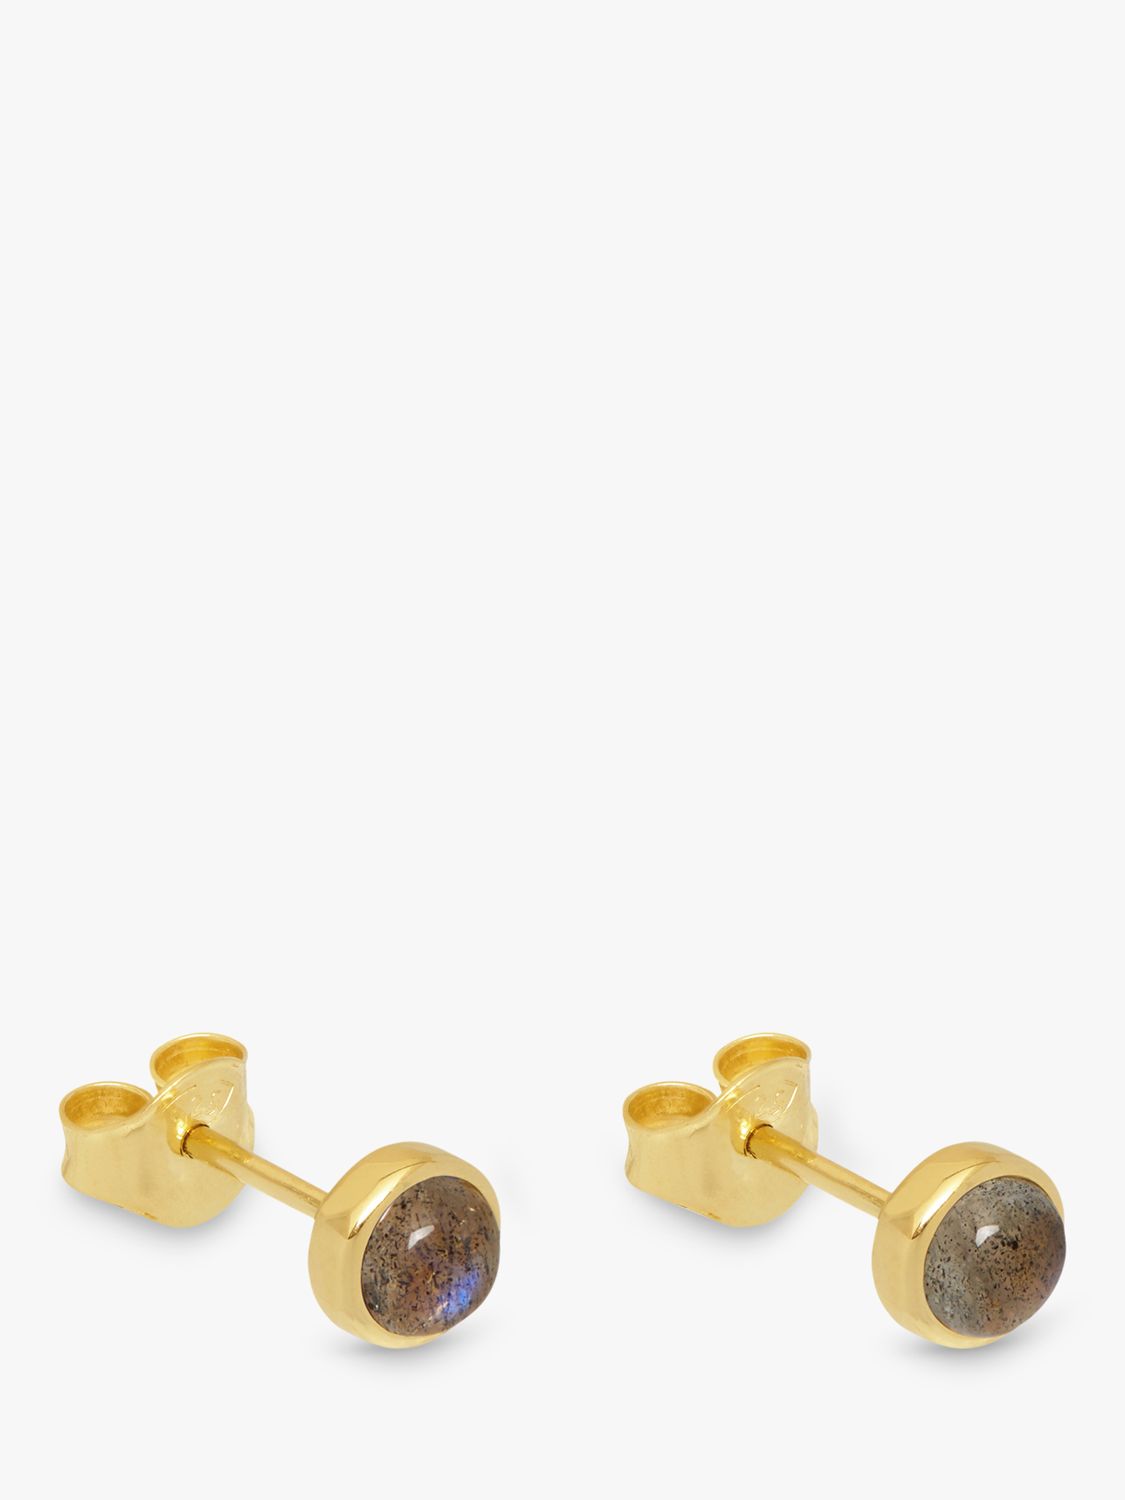 Lola Rose Curio Semi-Precious Stone Stud Earrings, Labradorite